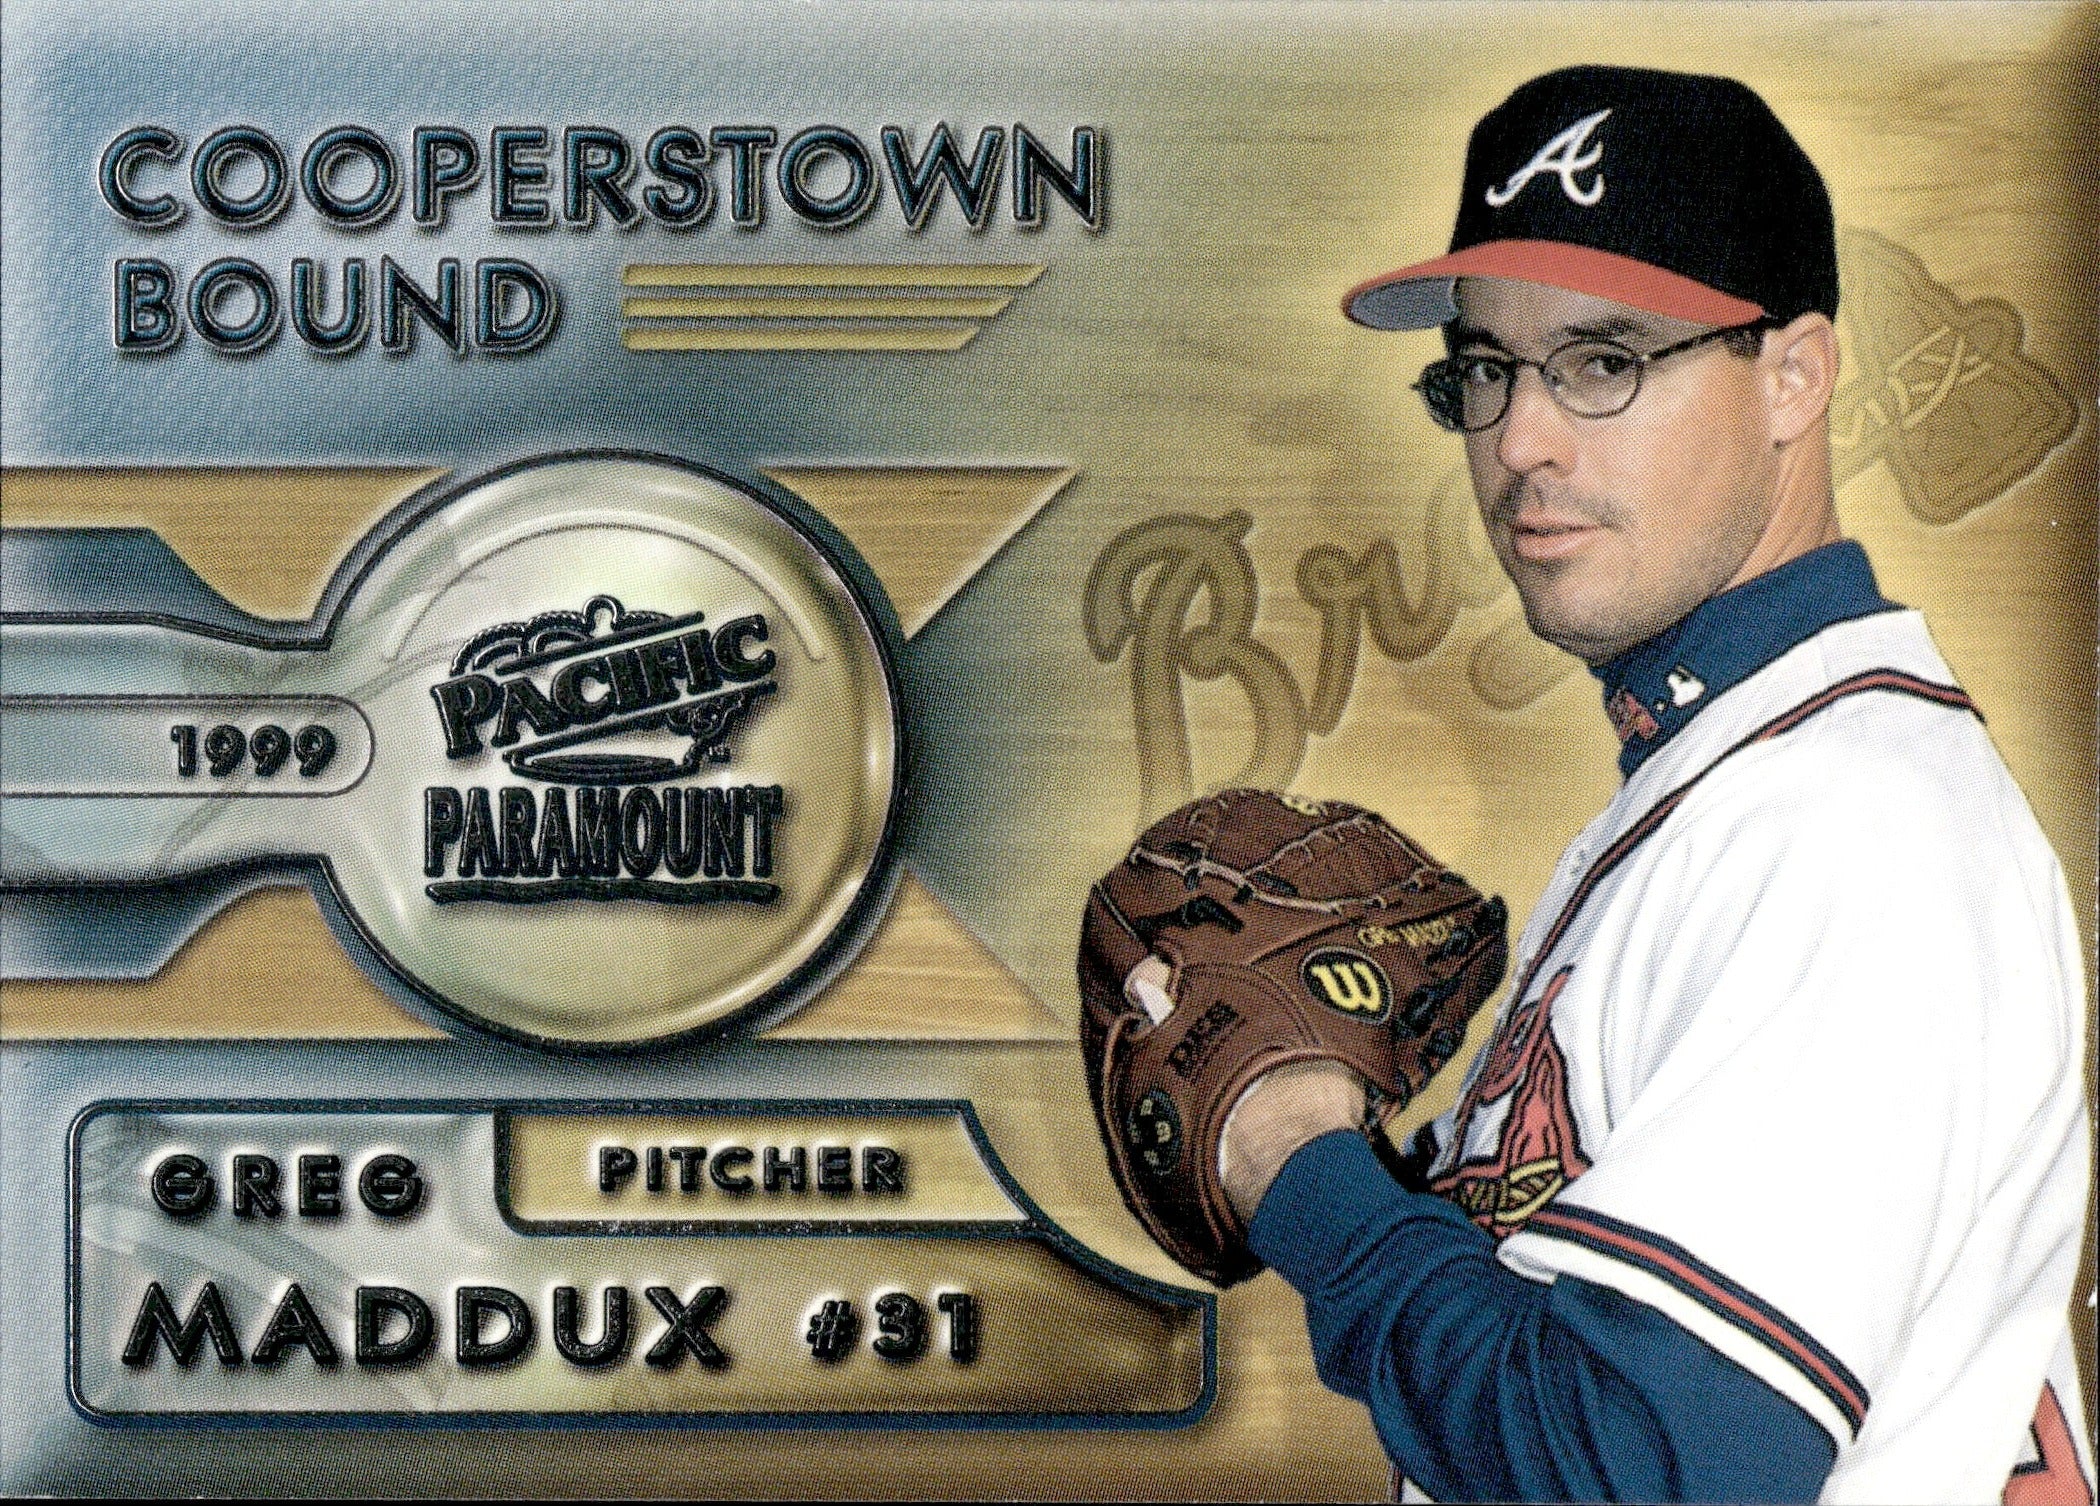 1999 Greg Maddux Pacific Paramount COOPERSTOWN BOUND #1 Atlanta Braves HOF